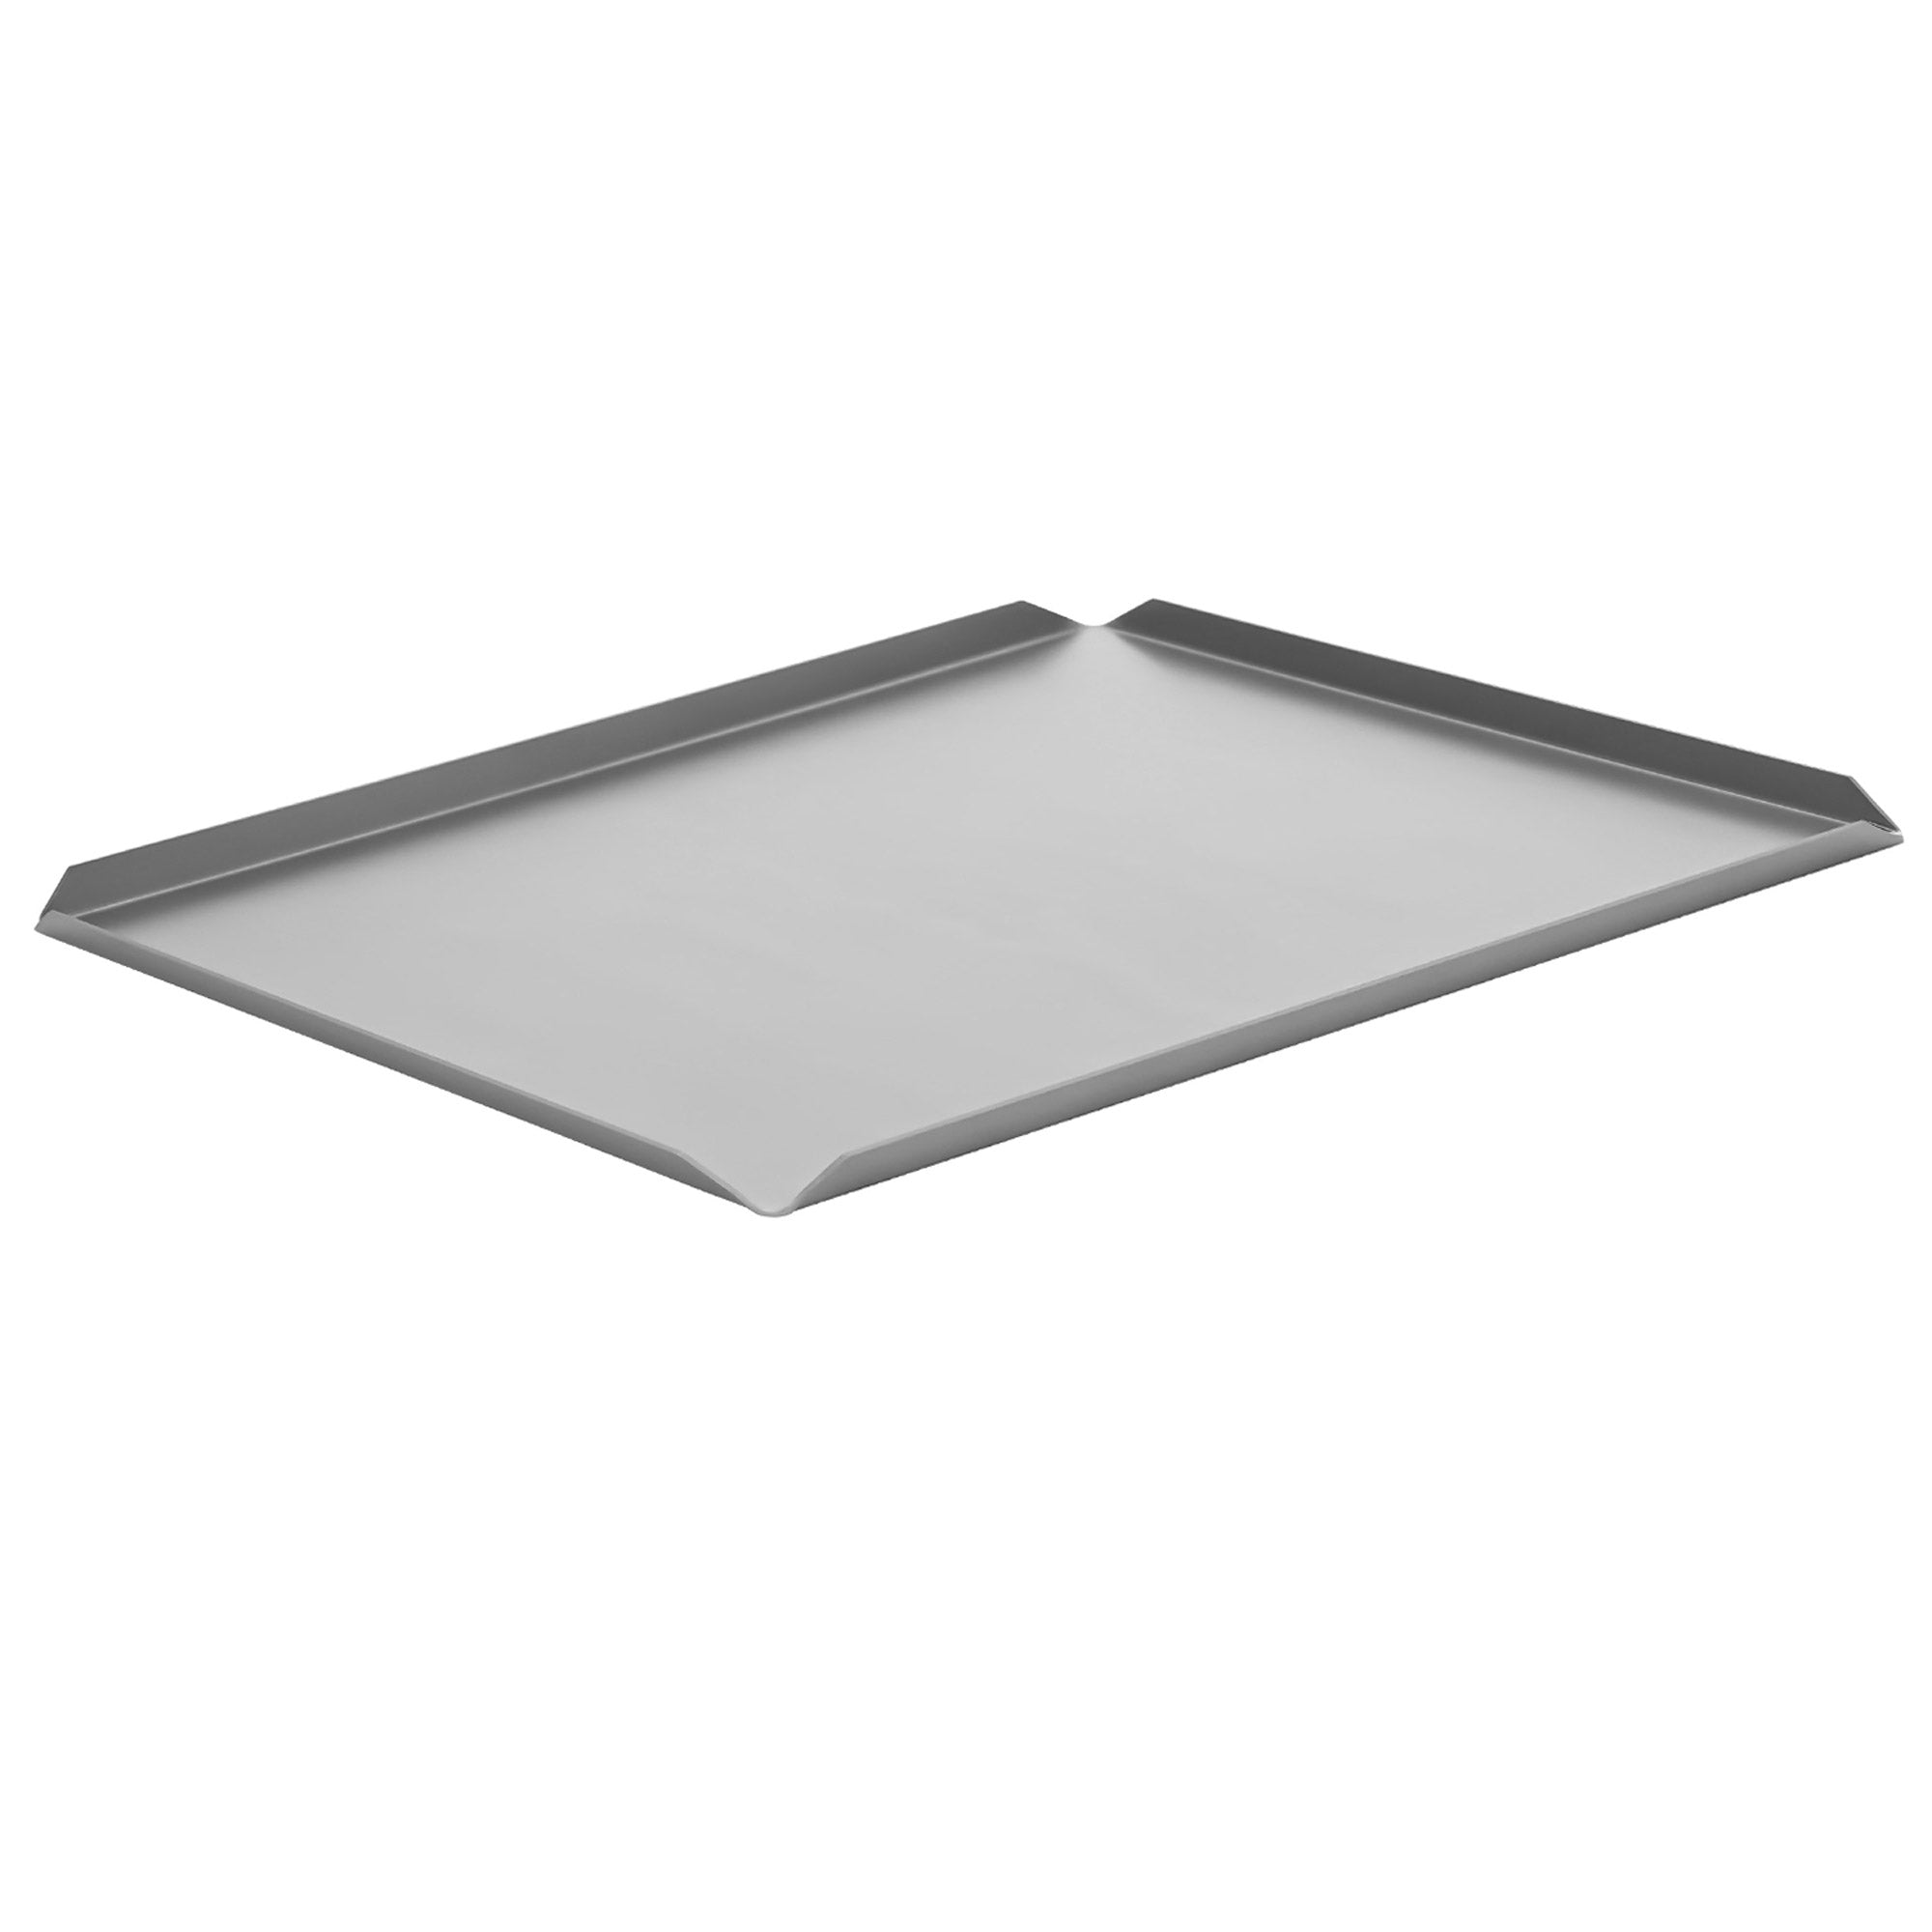 (5 броя) Алуминиева табела за сладкарски изделия и презентации - 600 x 400 x 10 mm - алуминий